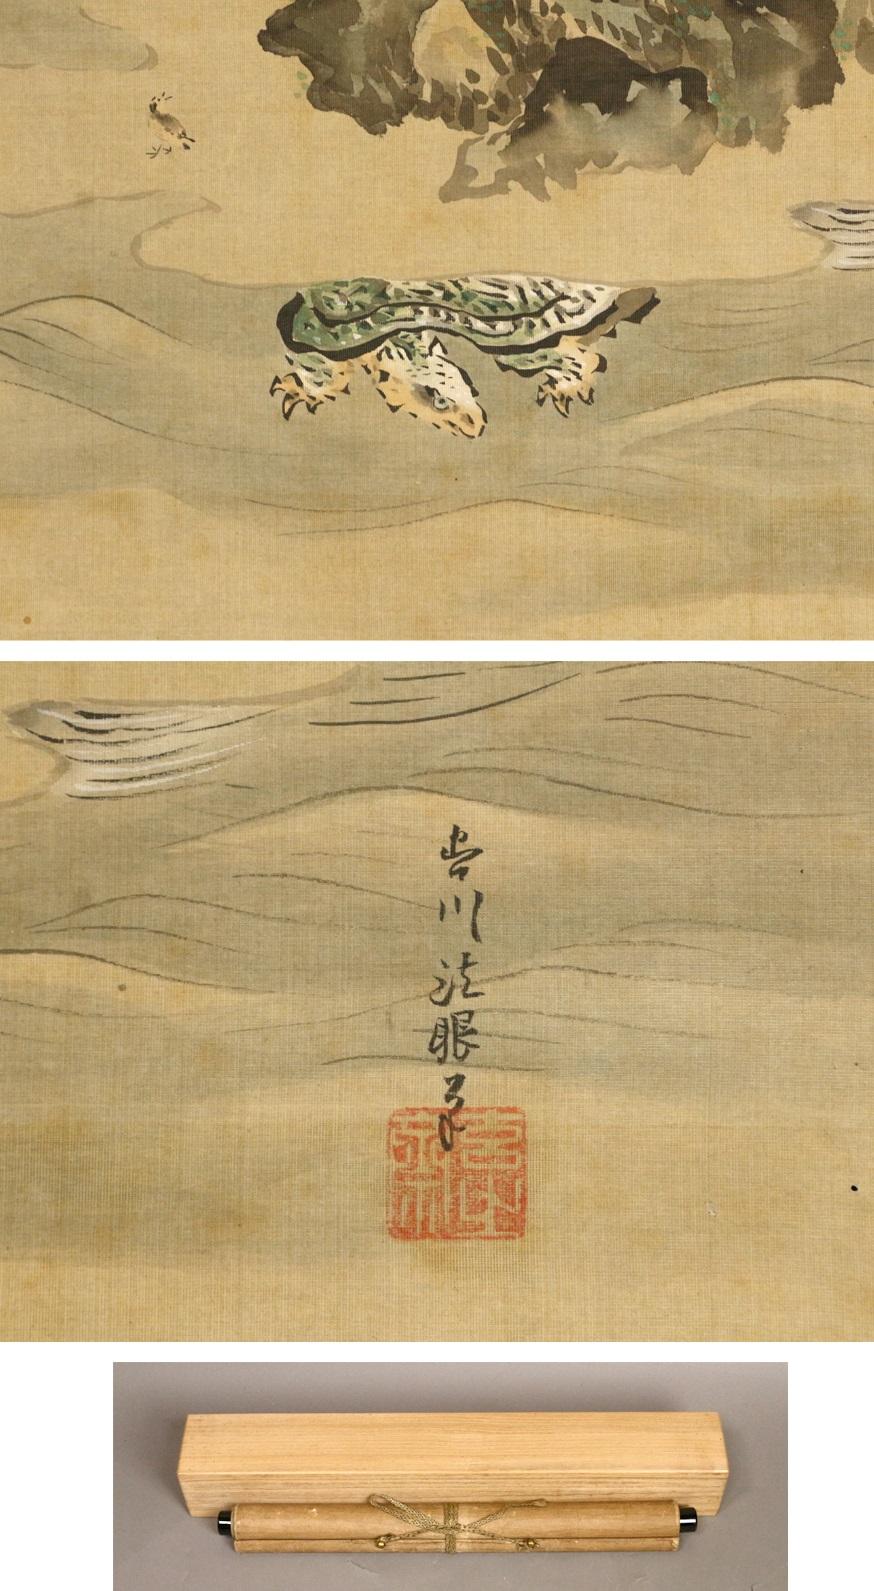 Kano School ca 1700 Scene Edo Period Scroll Japan 17/18c Artist Tosa Mitsunari In Good Condition For Sale In Amsterdam, Noord Holland